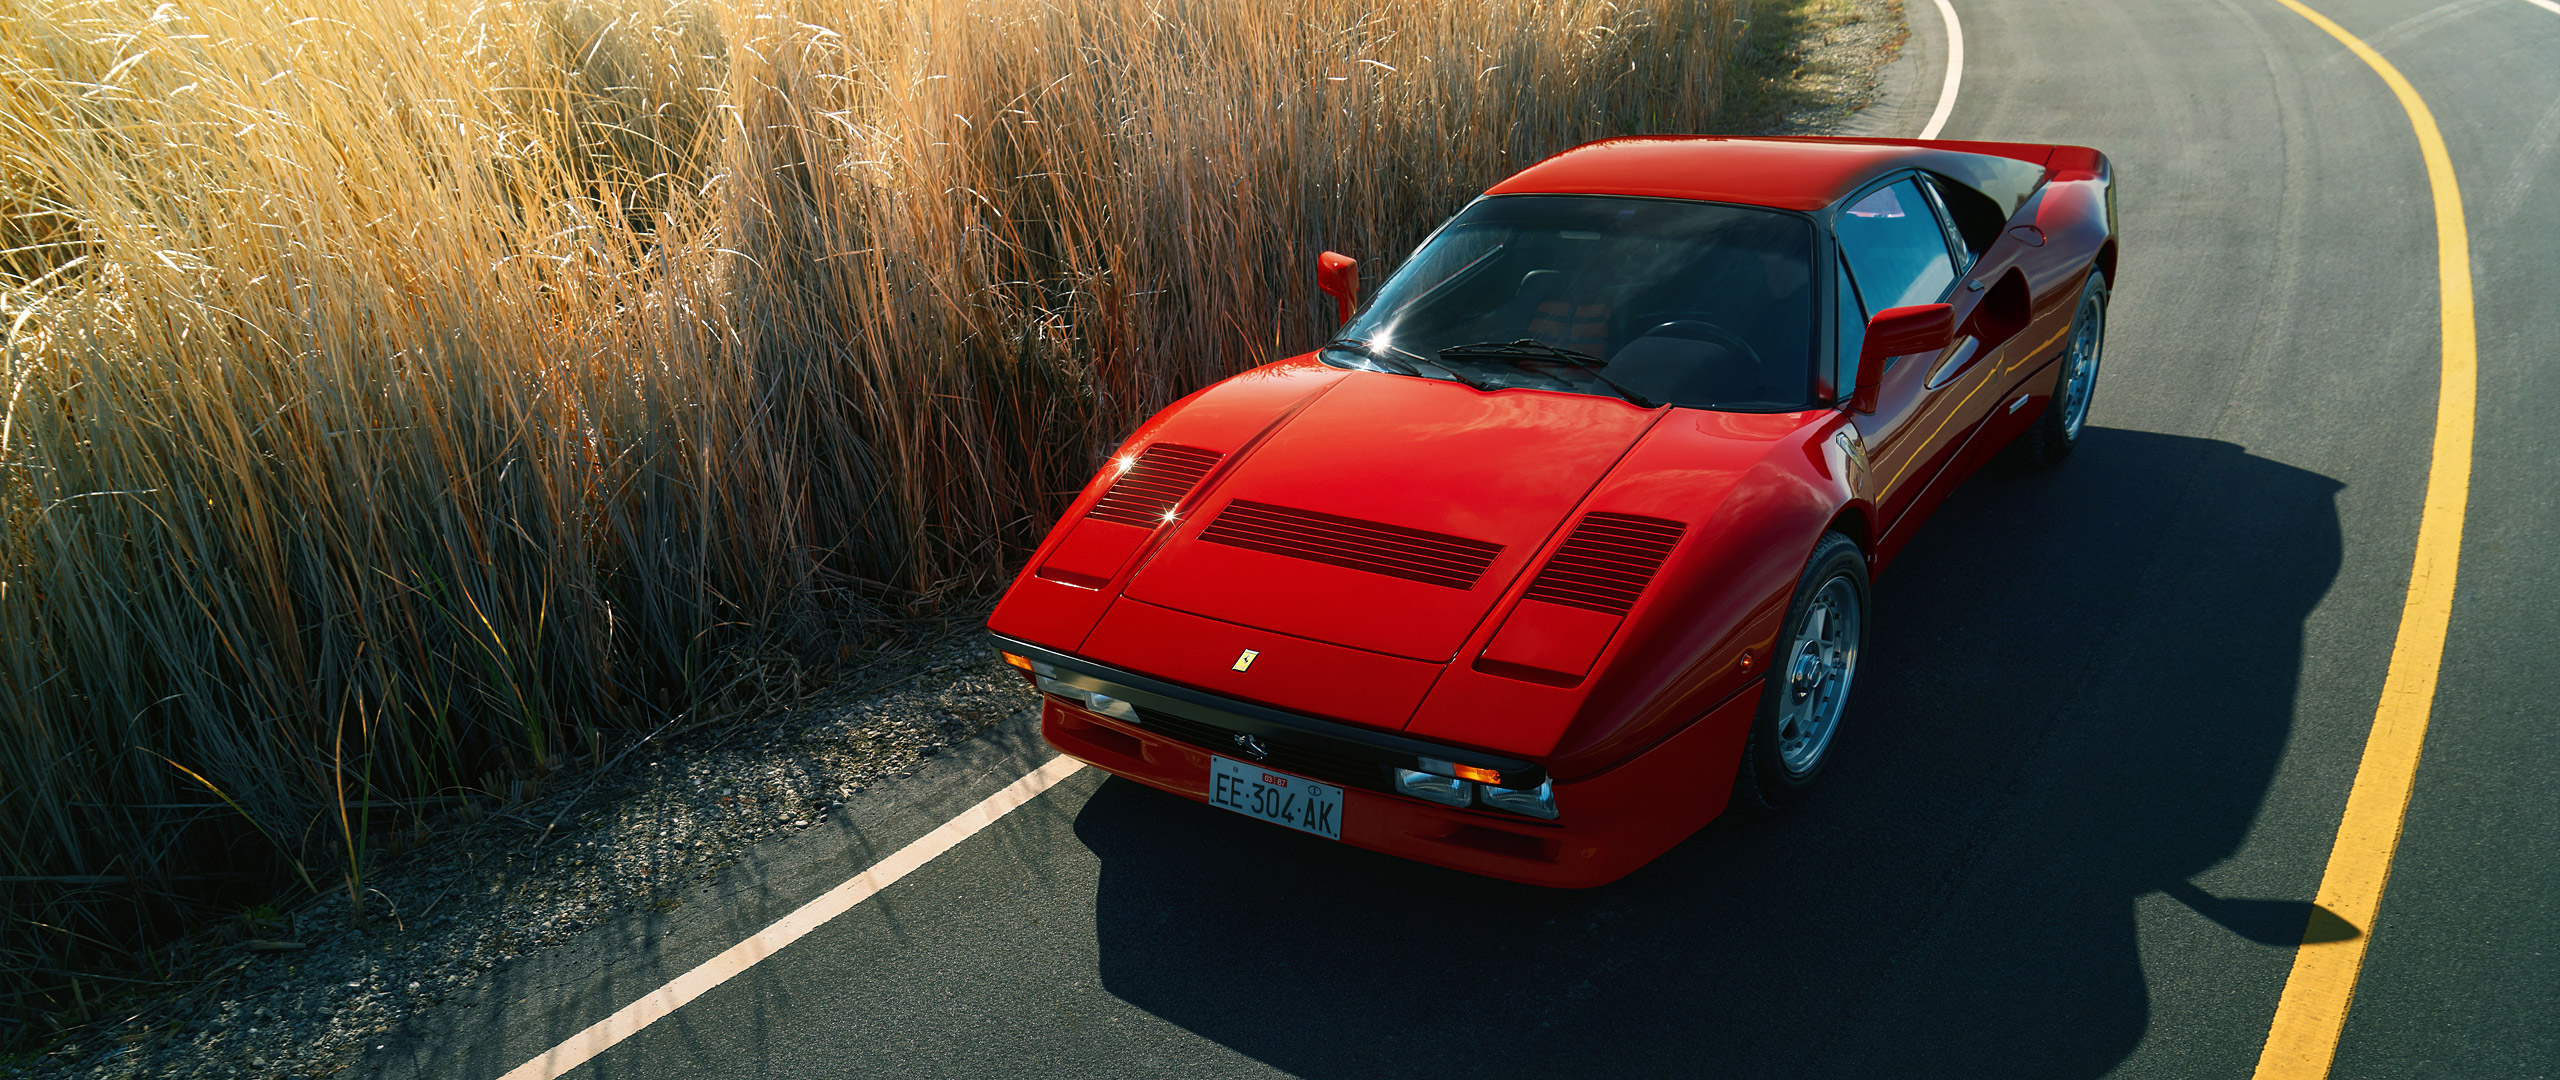  1984 Ferrari 288 GTO Wallpaper.